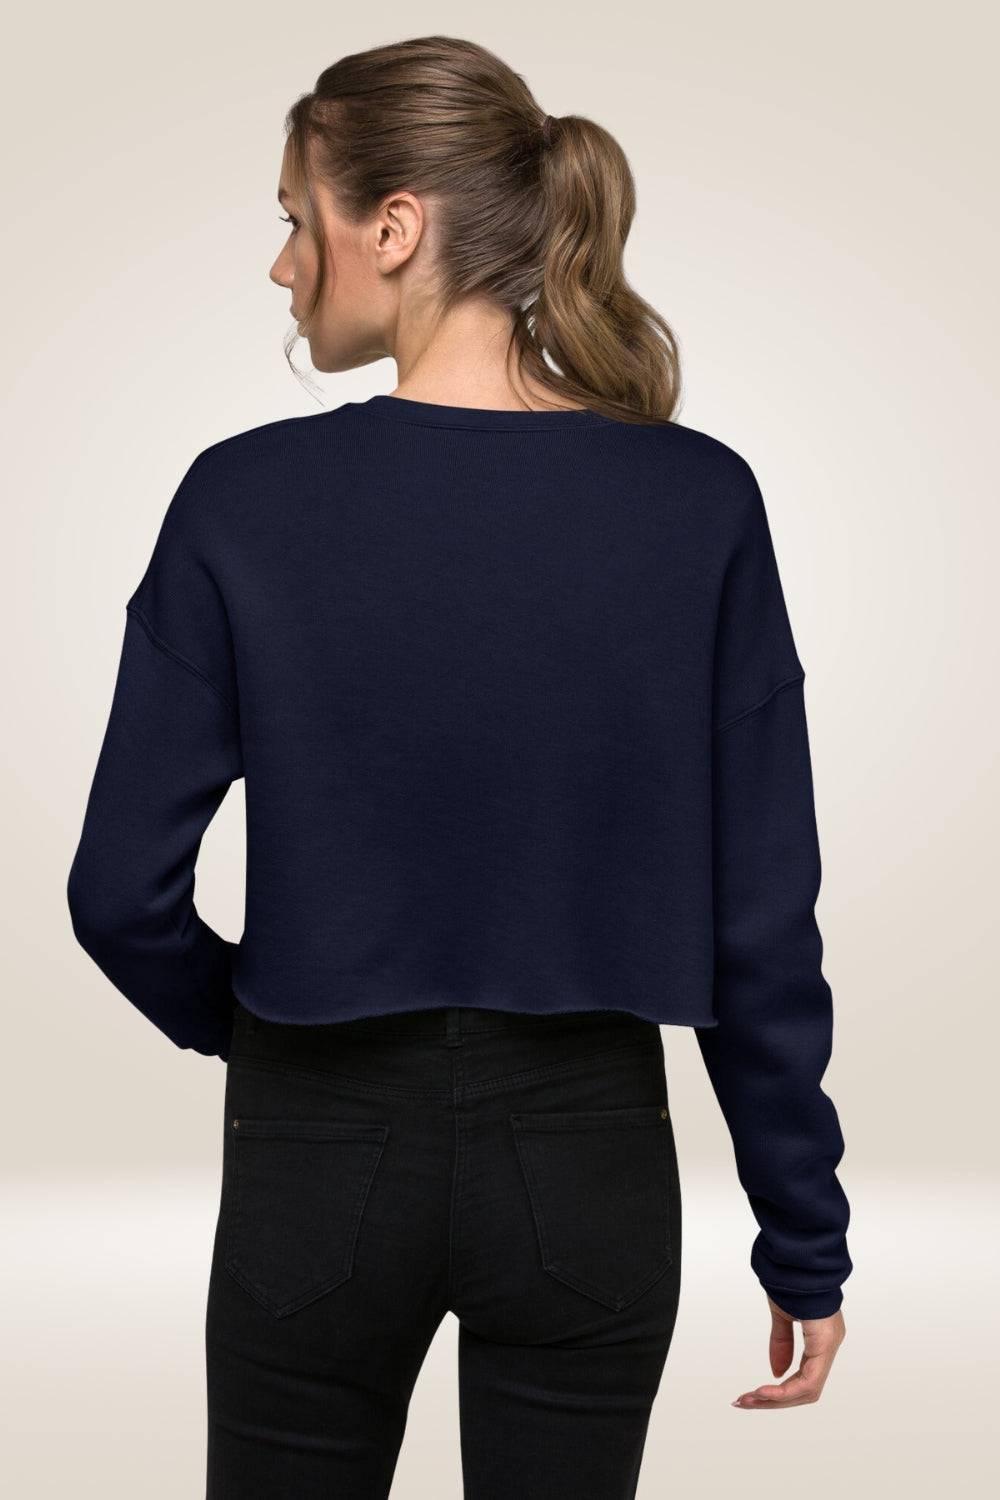 TGC X Reaction Navy Blue Cropped Sweatshirt - TGC Boutique - Cropped Sweatshirt